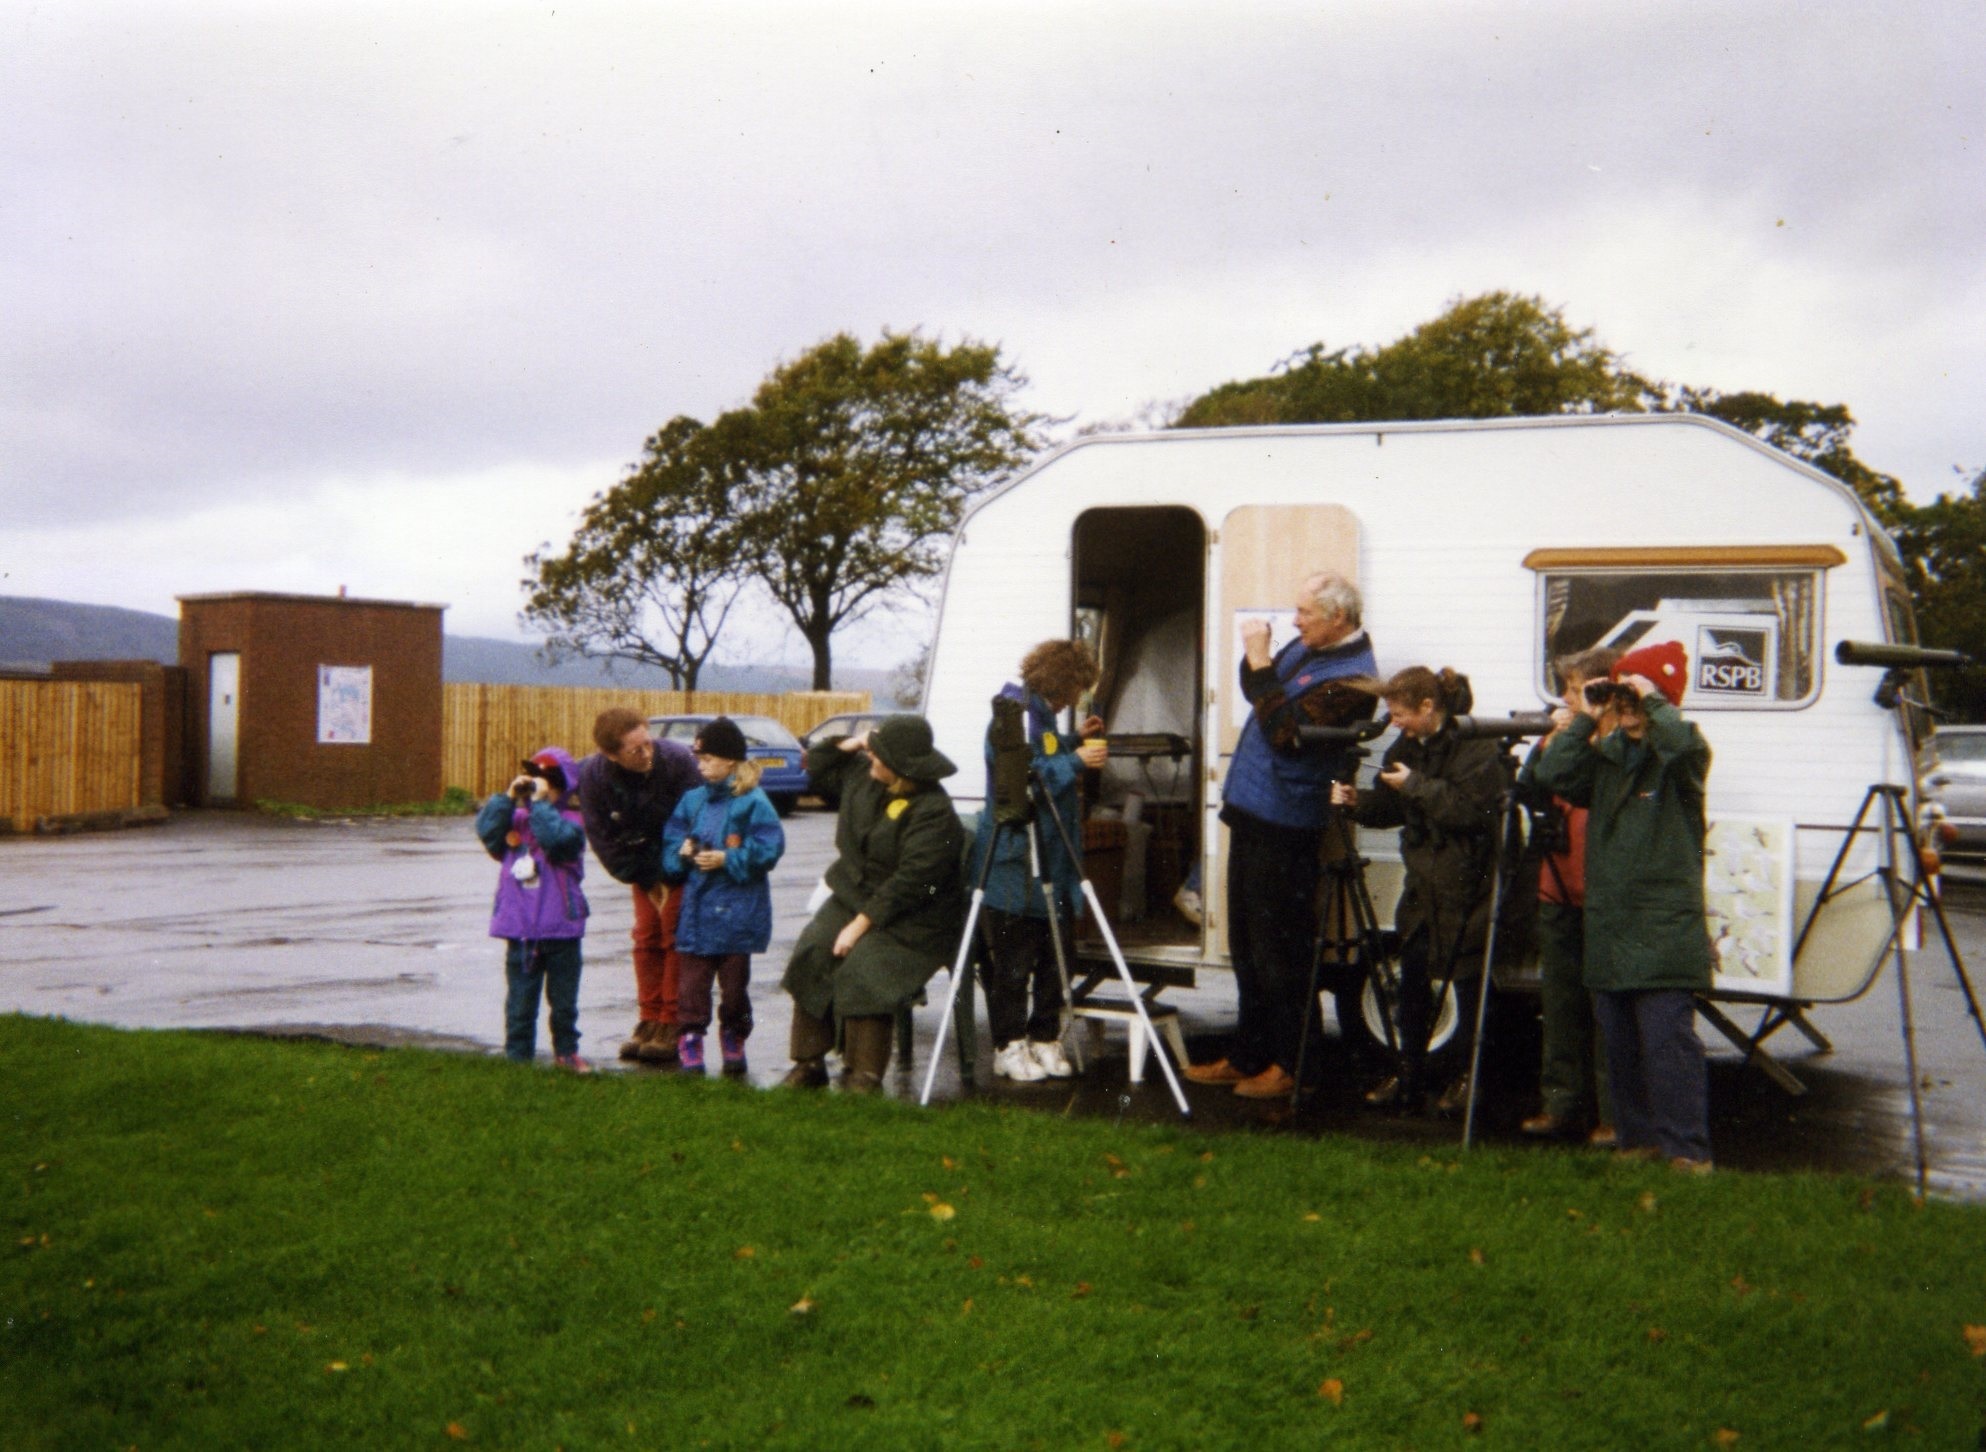 Steve Chadwin birdwatching at RSPB World Birdwatch Day, October 4, 1997, at Kidston car park